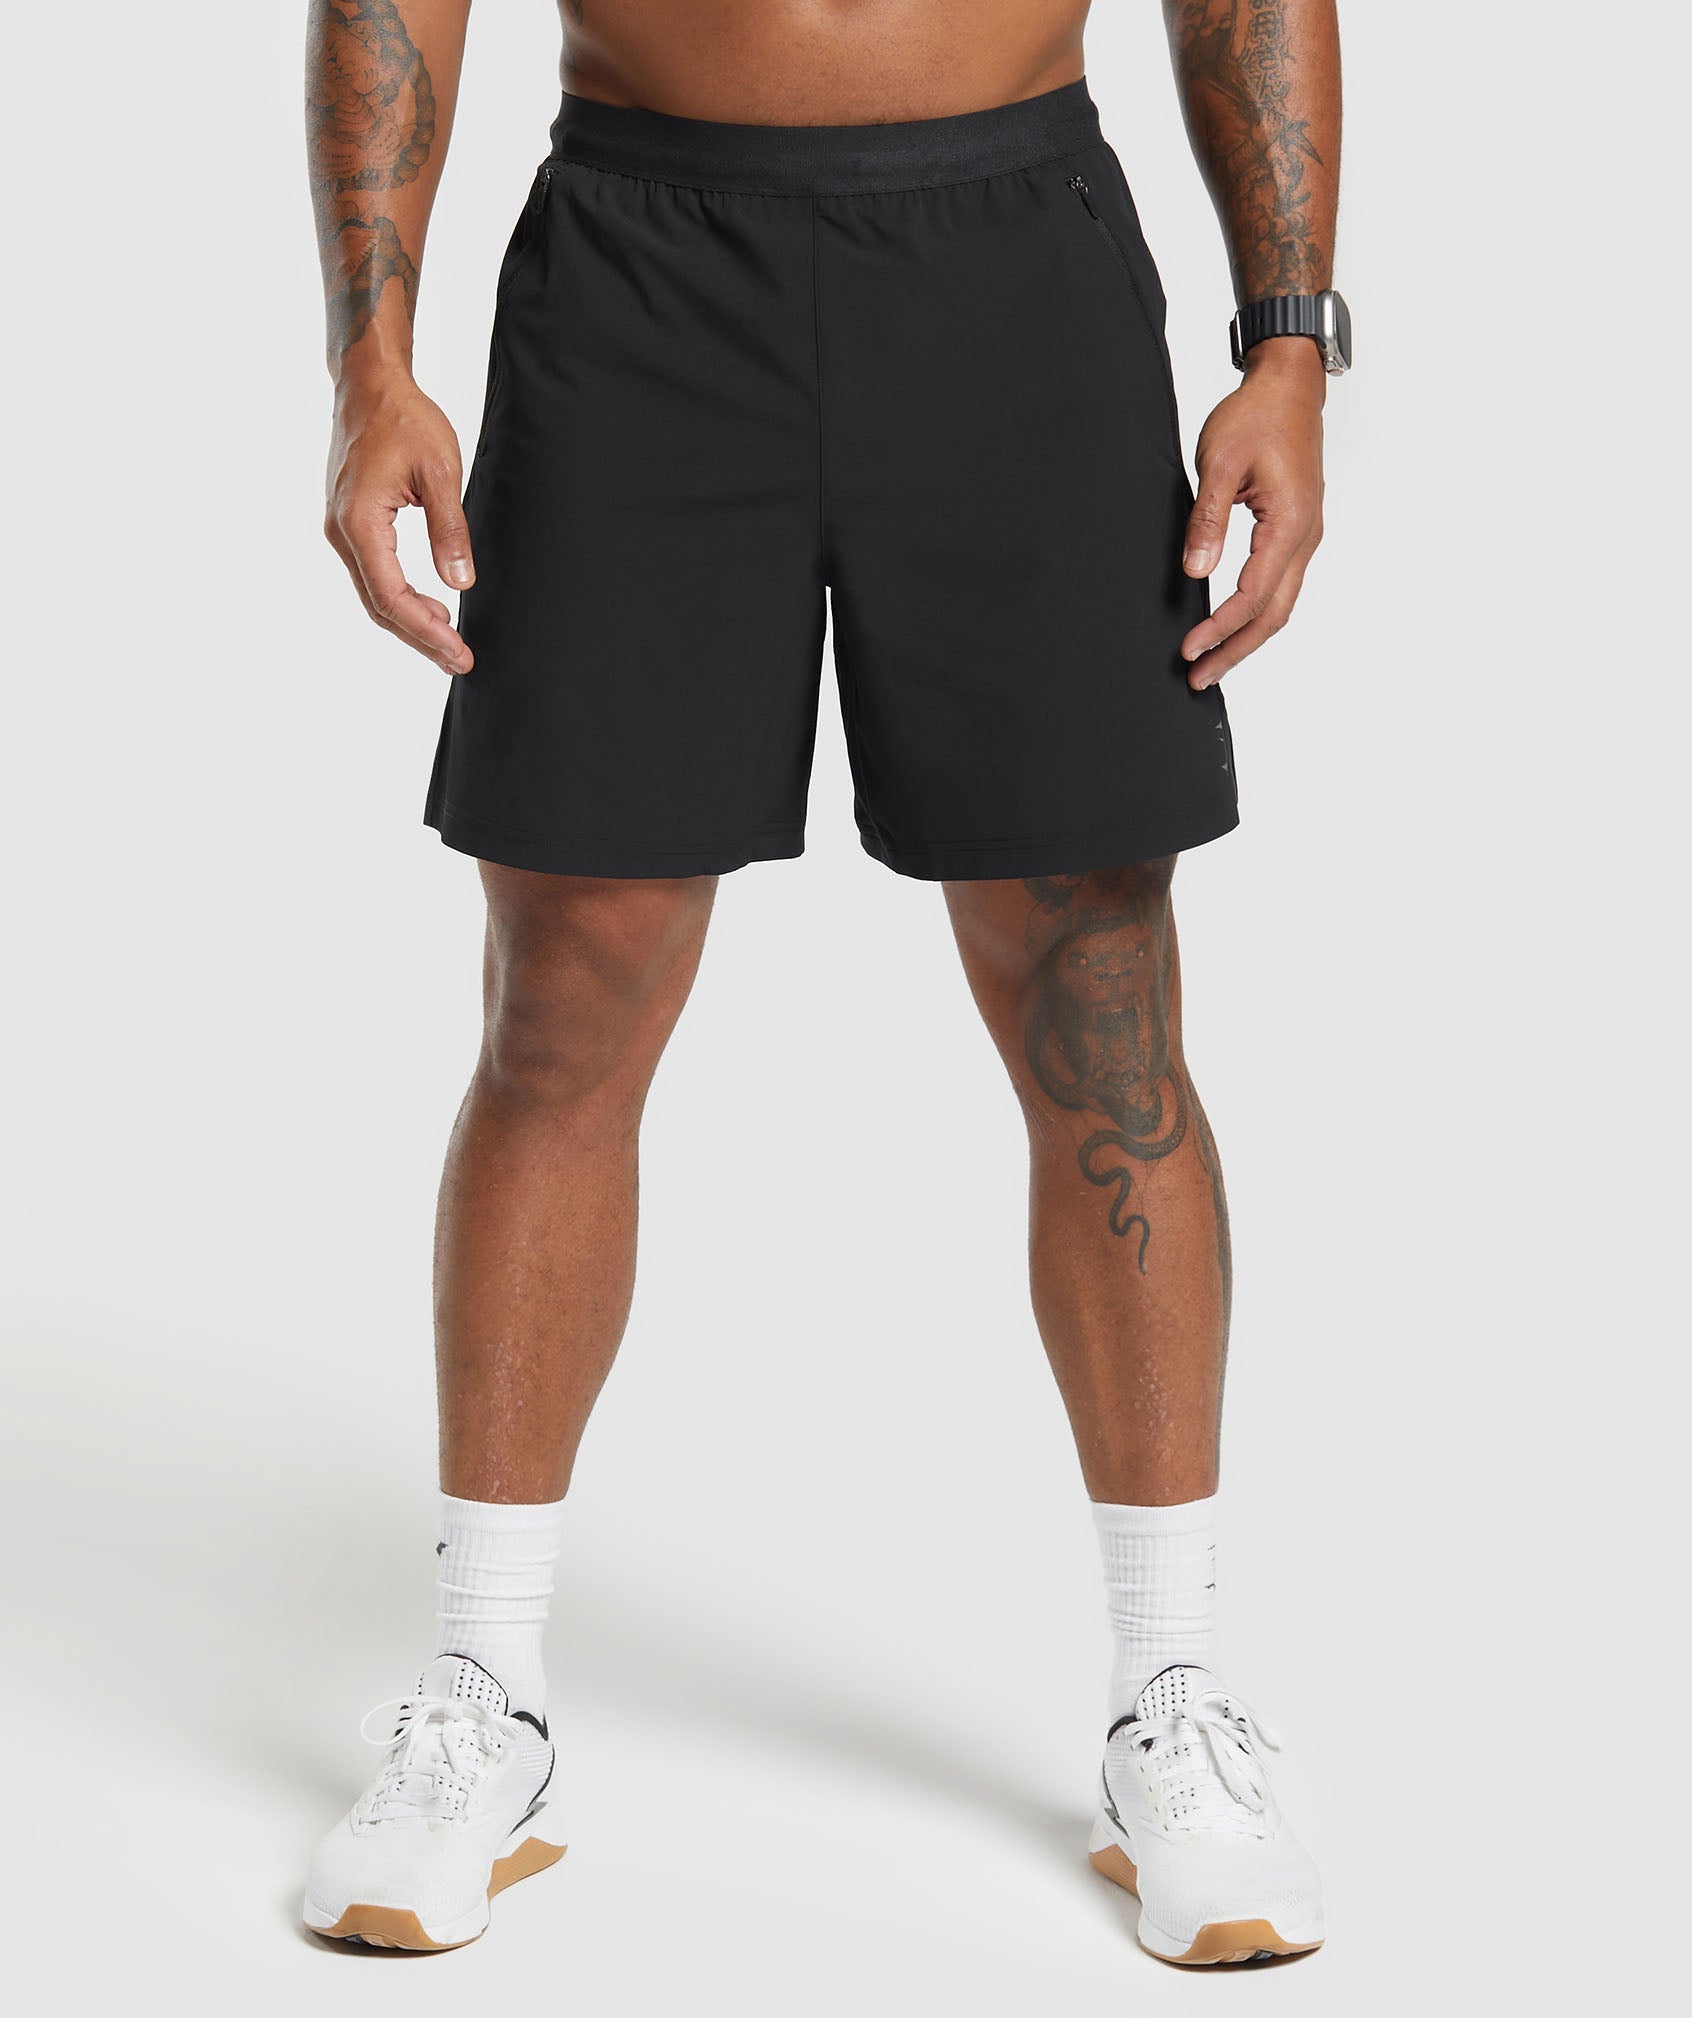 Apex 7" Hybrid Shorts in Black - view 1